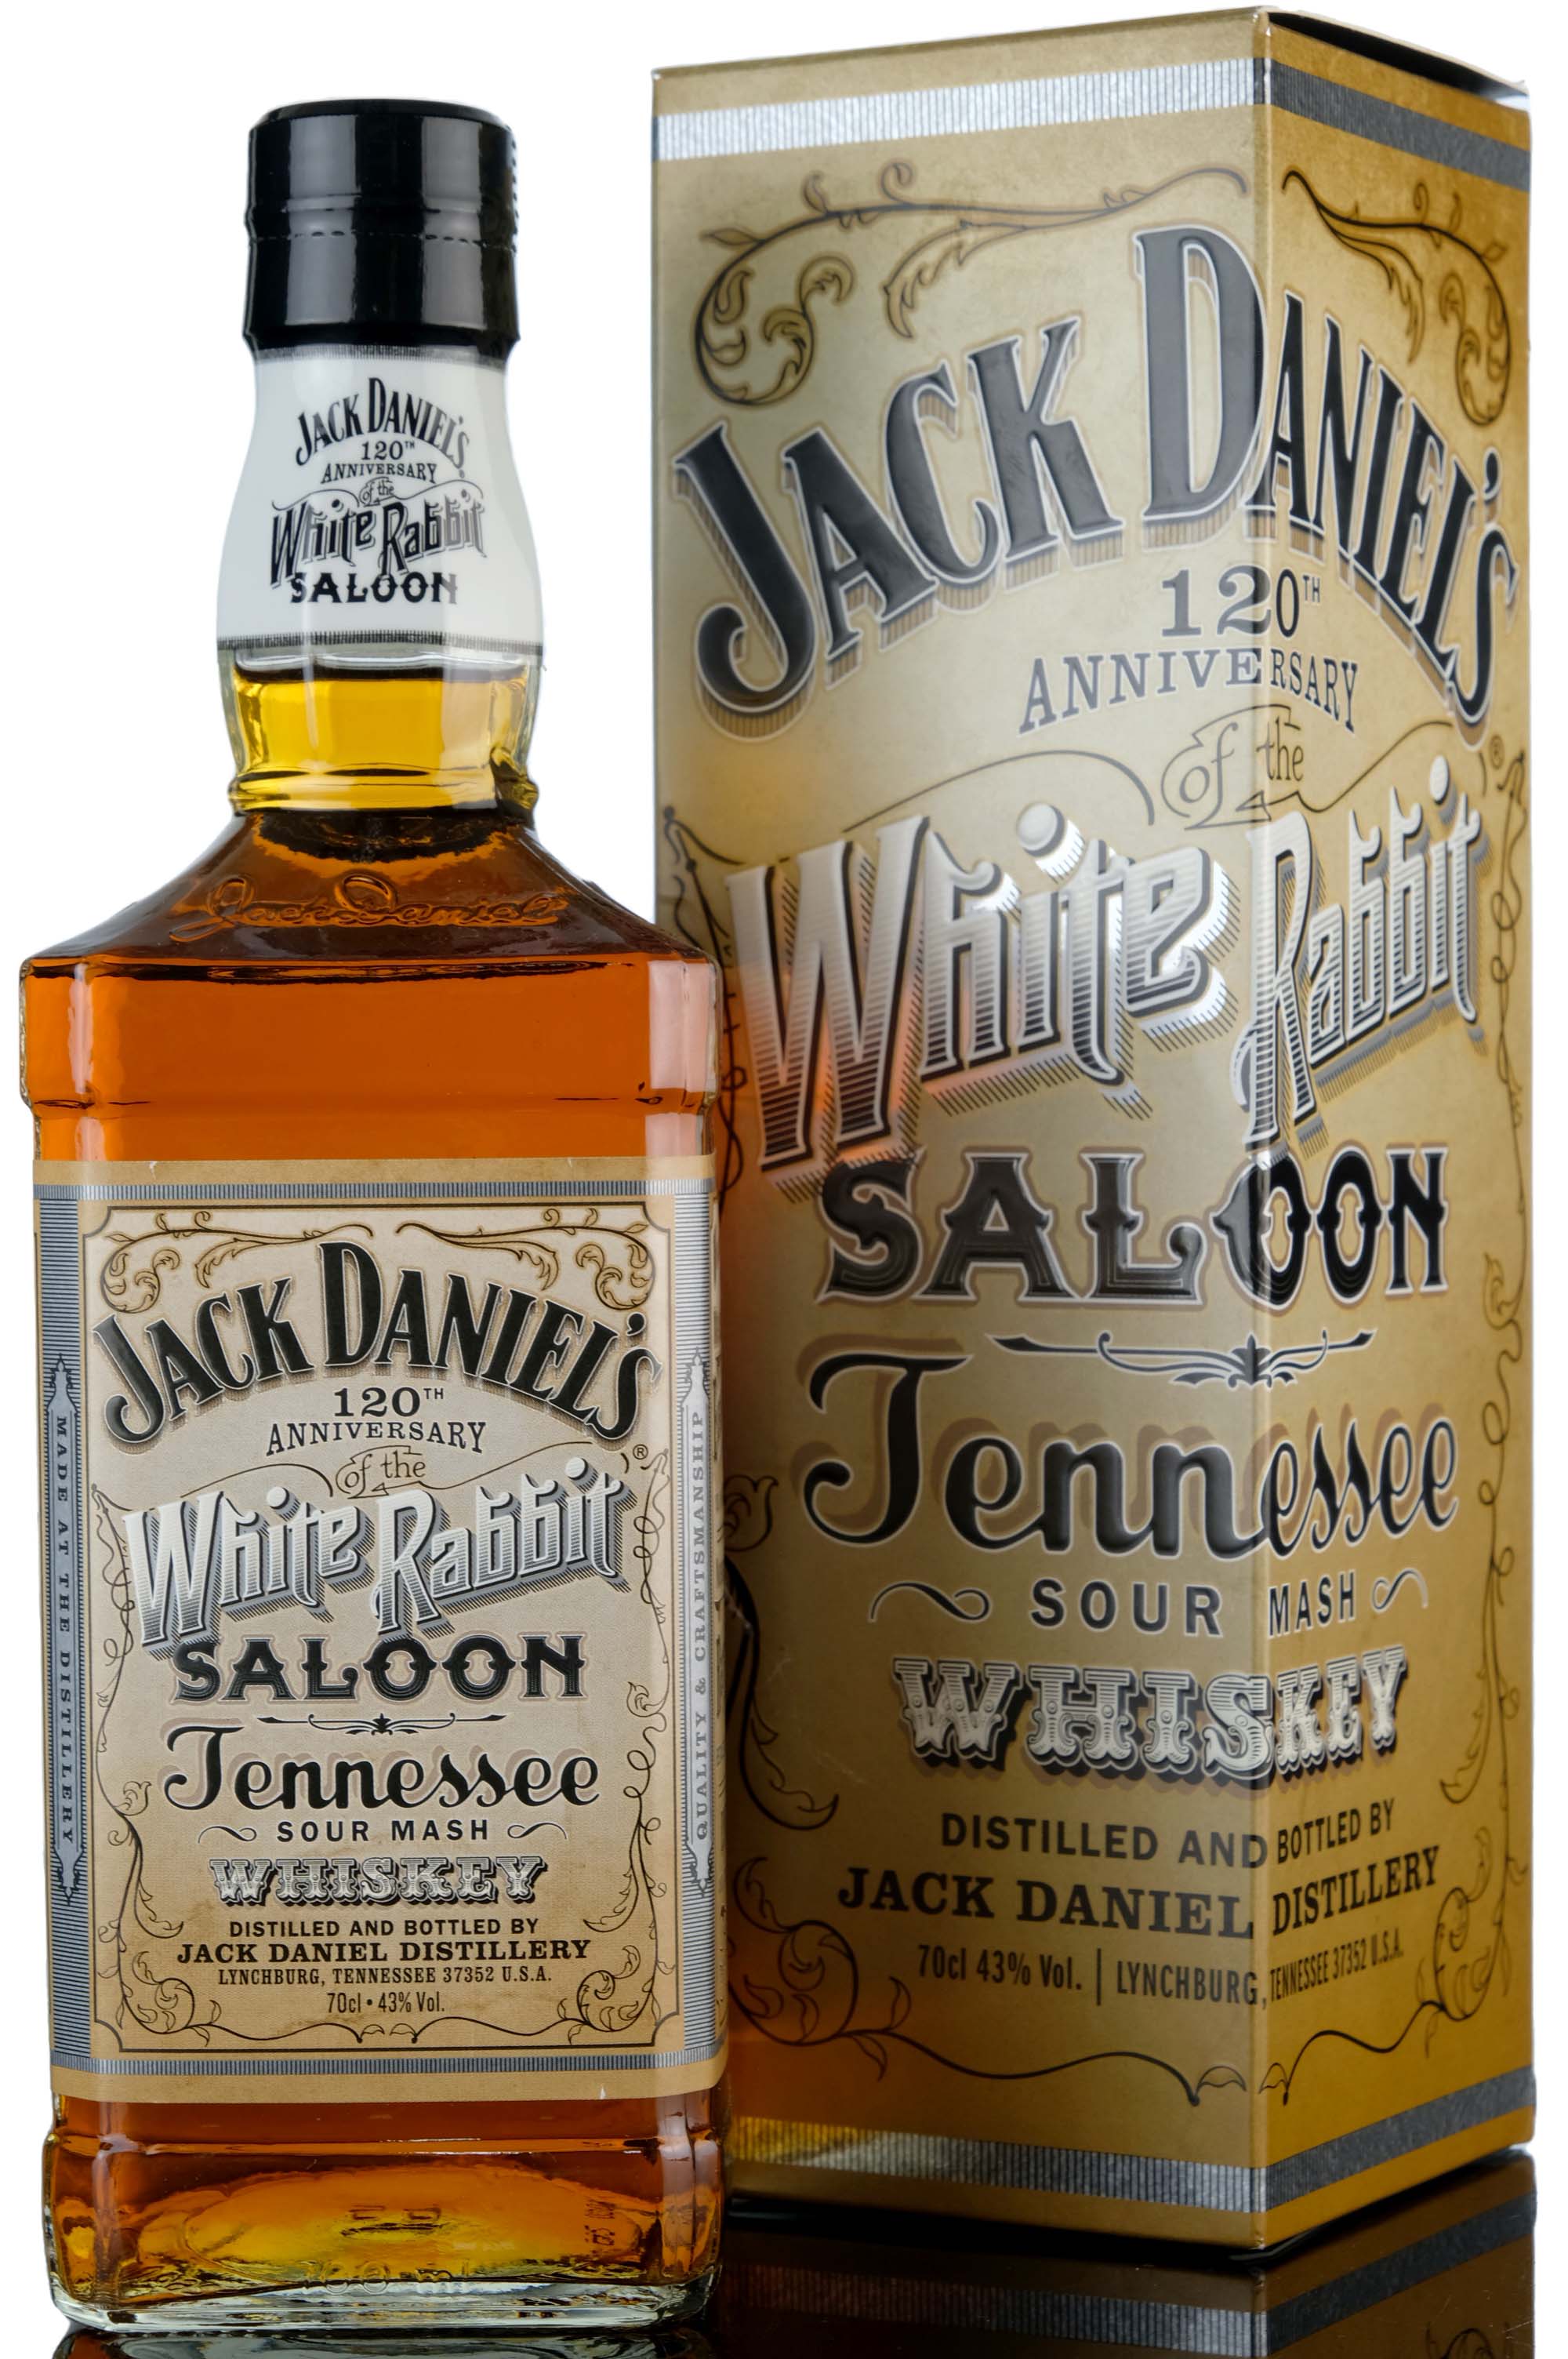 Jack Daniels The White Rabbit Saloon - 120th Anniversary - 2012 Release